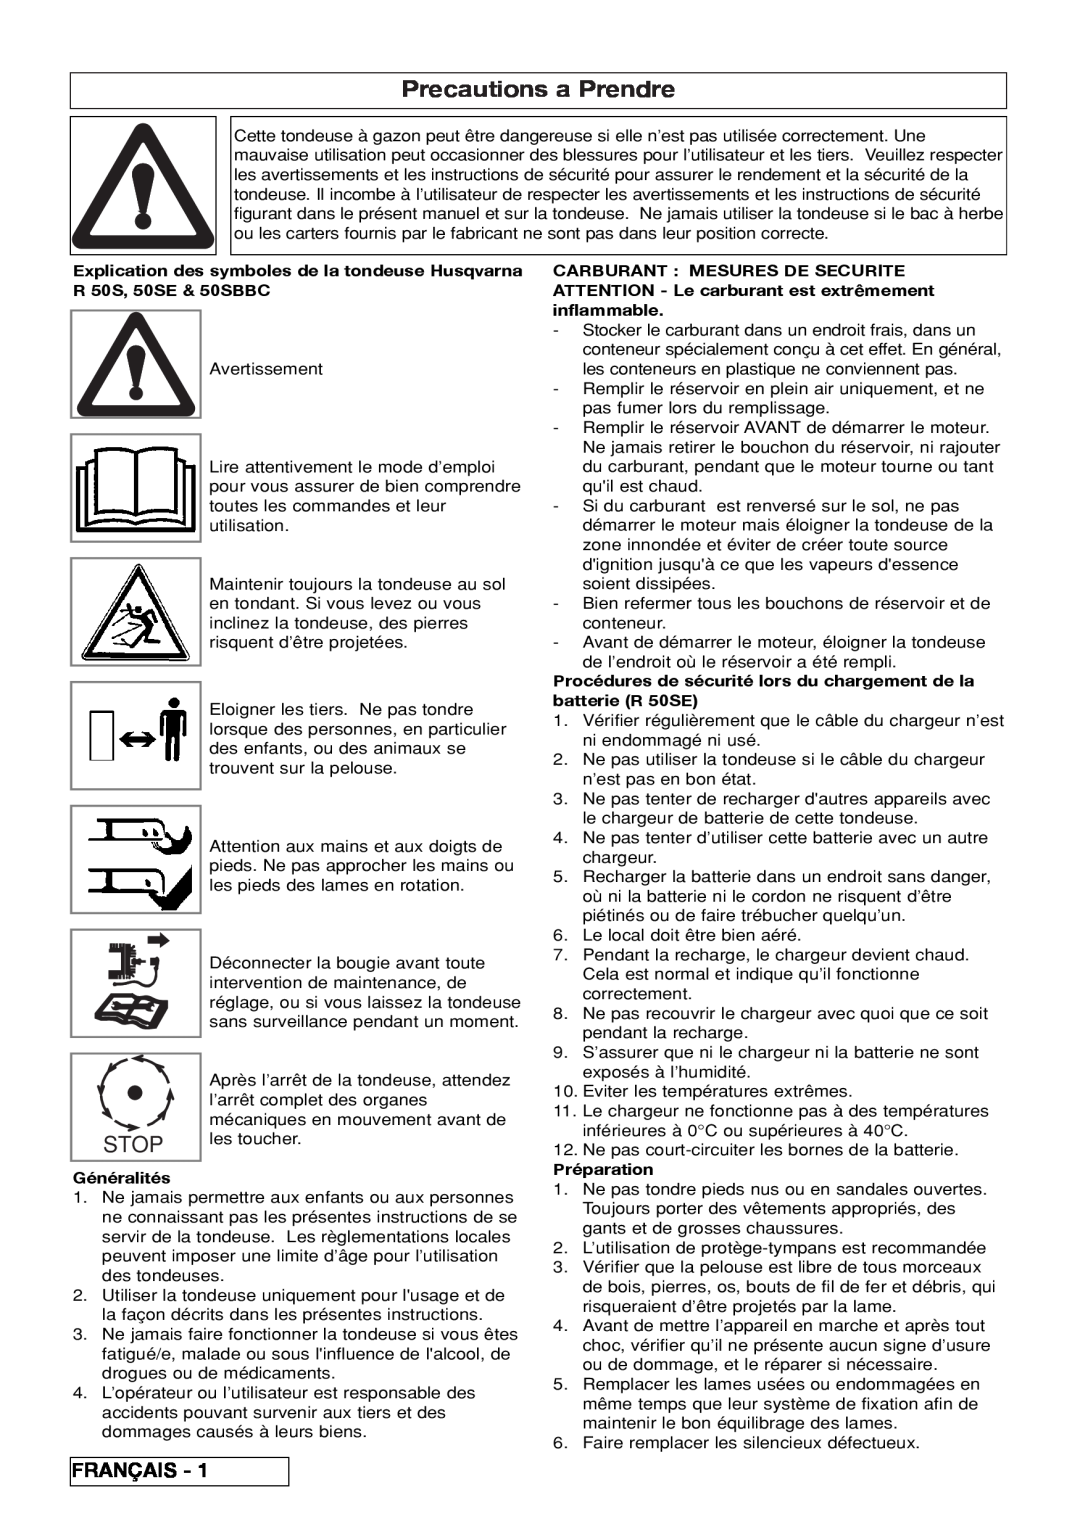 Husqvarna R 50SE, R 50S / BBC manual Precautions a Prendre, Stop, Français 